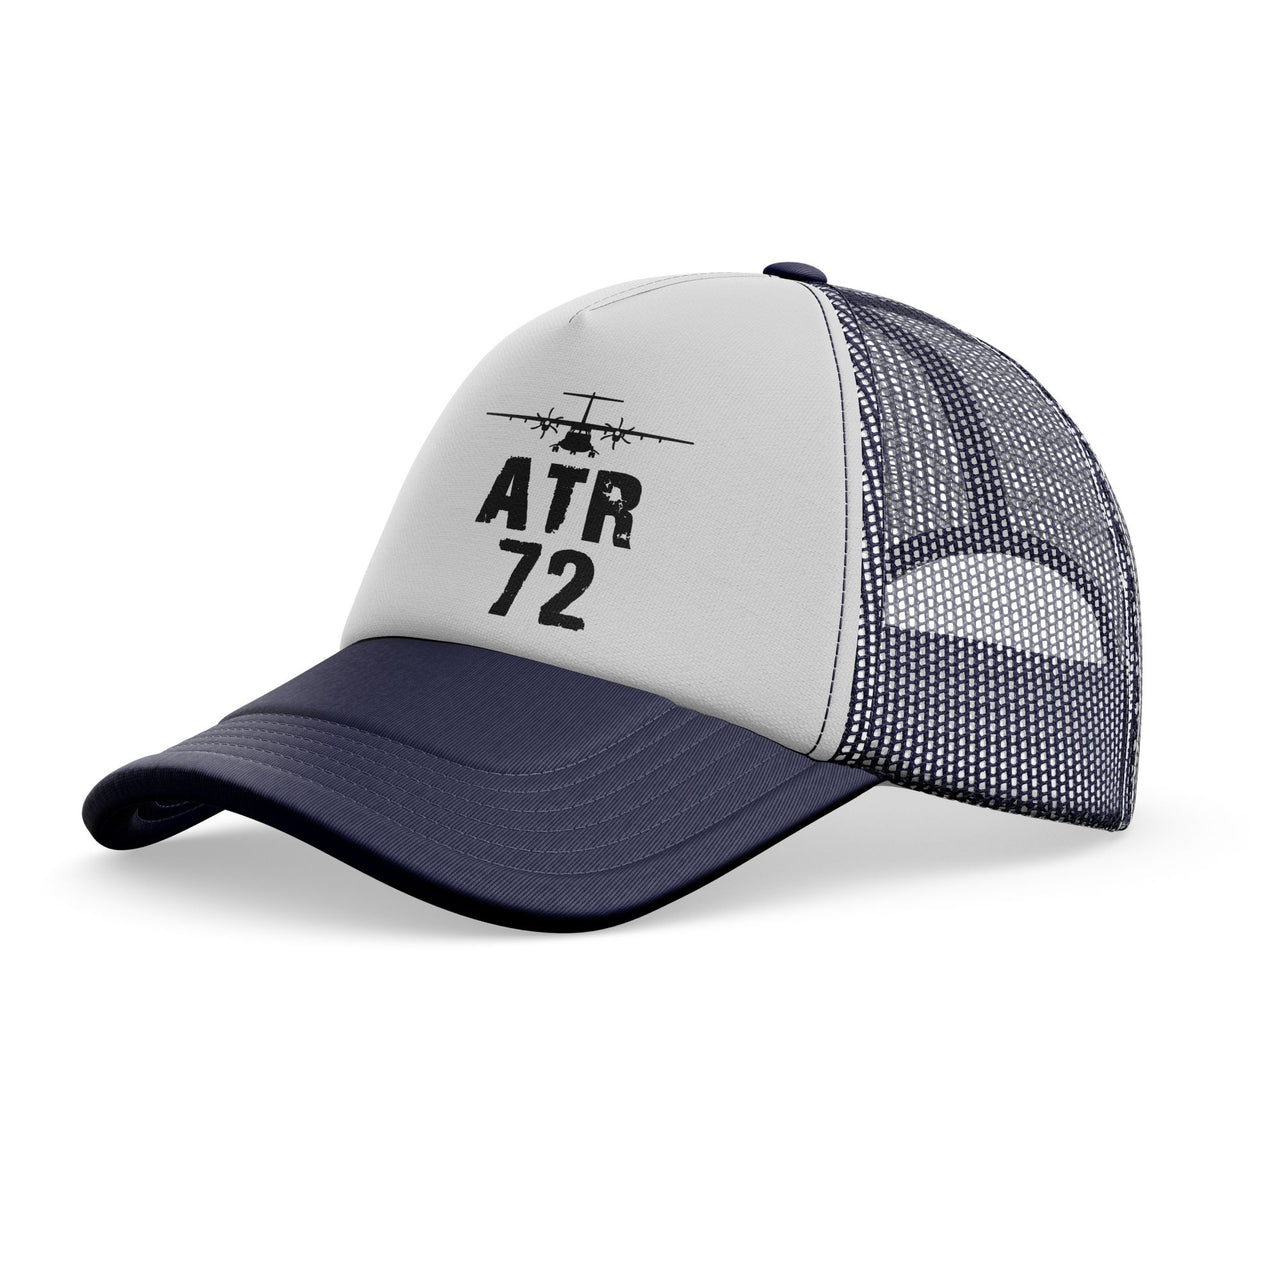 ATR-72 & Plane Designed Trucker Caps & Hats